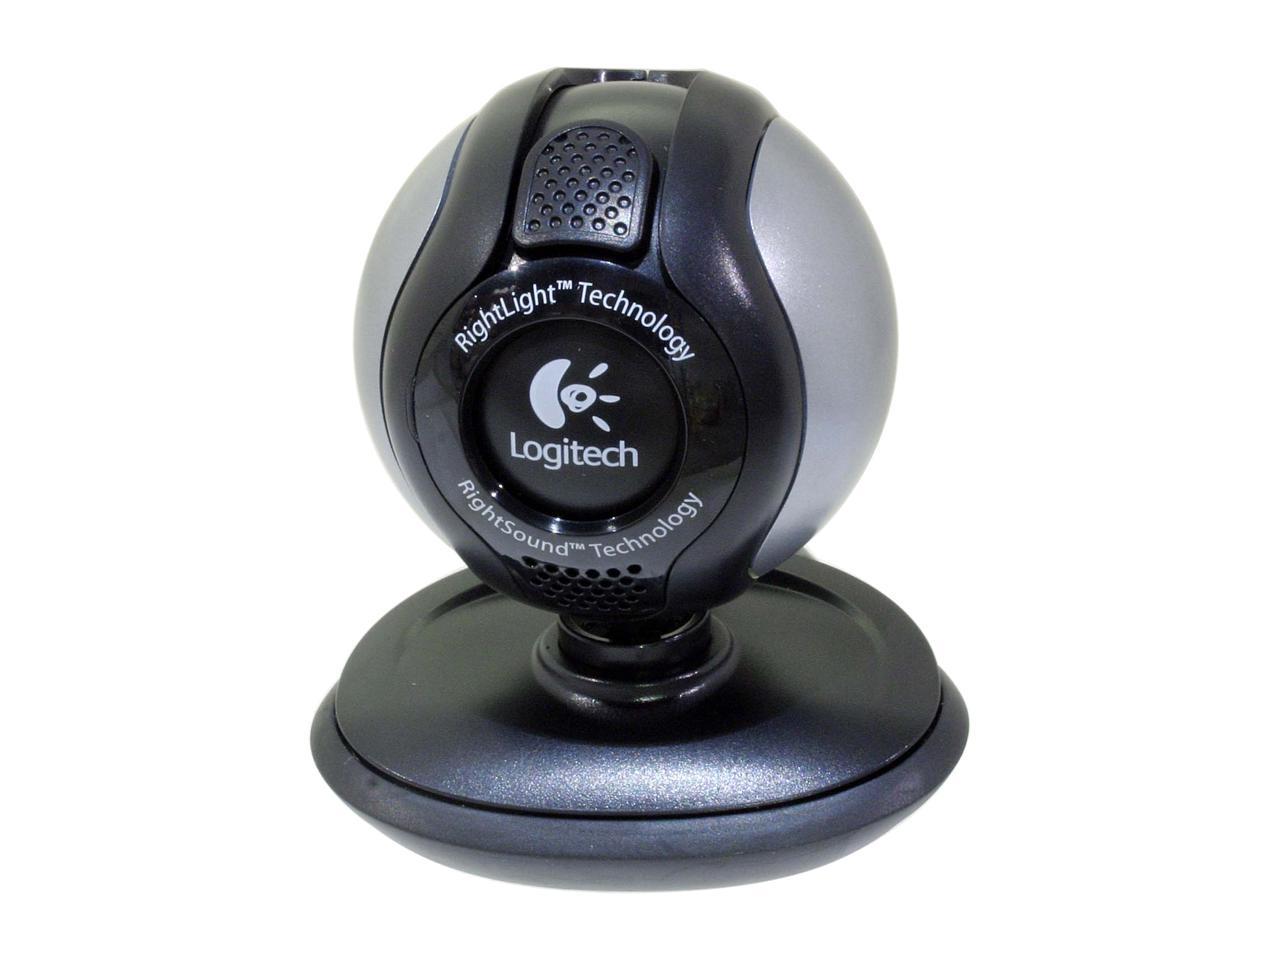 Logitech webcam драйвера. Камера Logitech 1.3 Megapixel. Камера Logitech RIGHTLIGHT Technology. Logitech QUICKCAM V11.5. Logitech QUICKCAM communicate STX (V-uam14a).